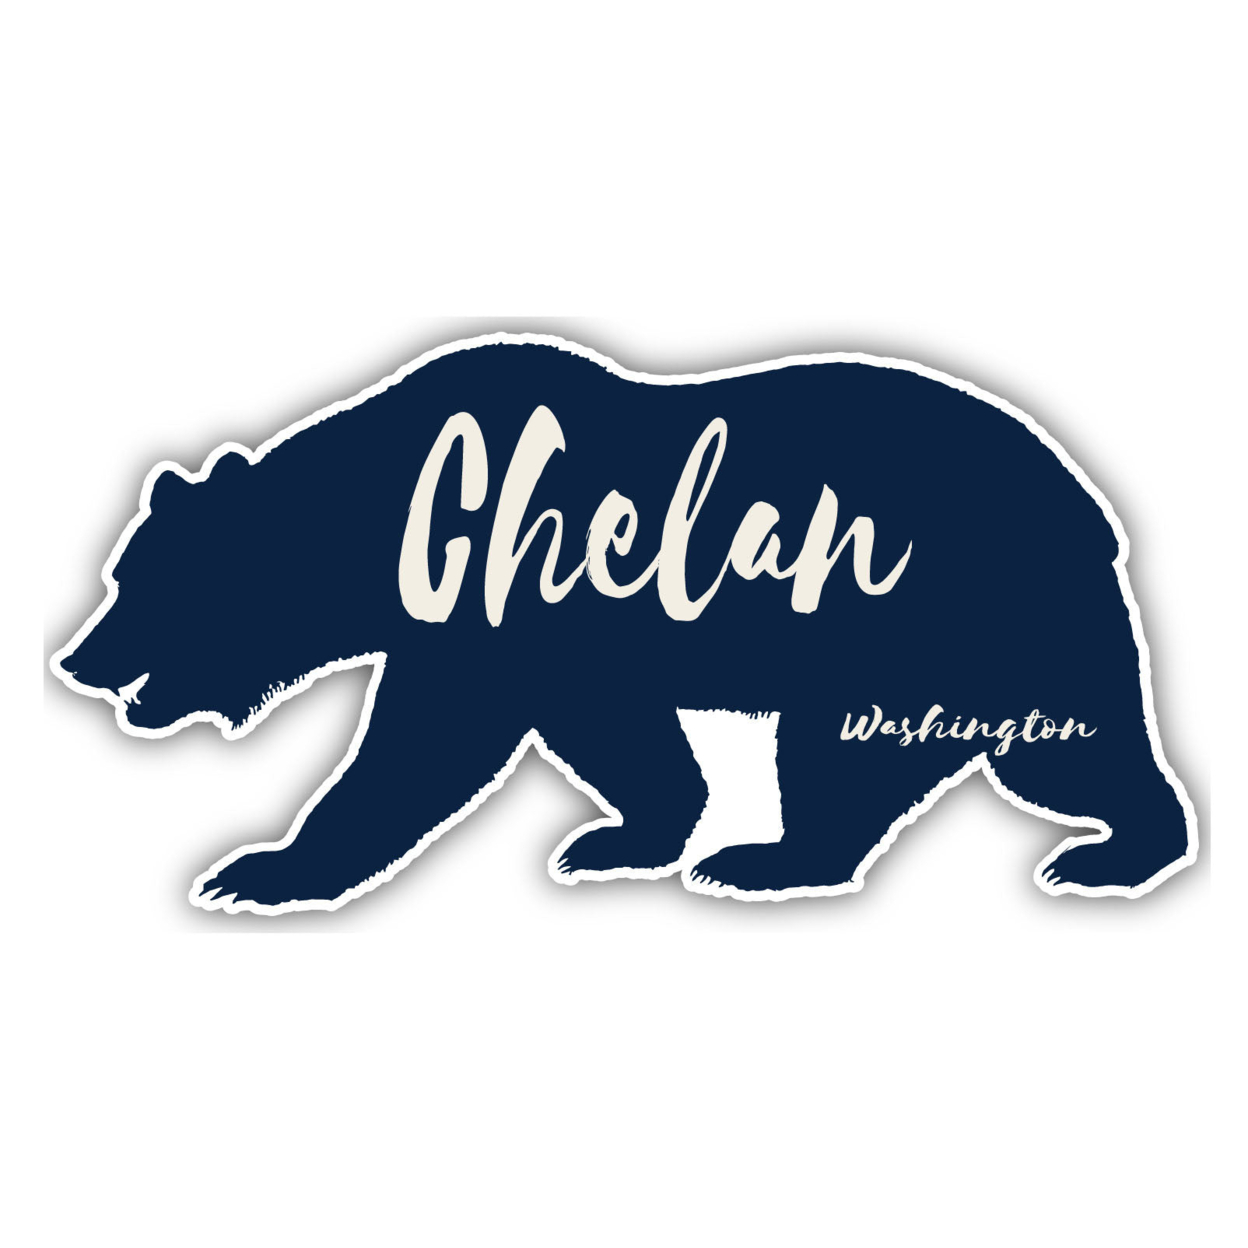 Chelan Washington Souvenir Decorative Stickers (Choose Theme And Size) - Single Unit, 6-Inch, Tent